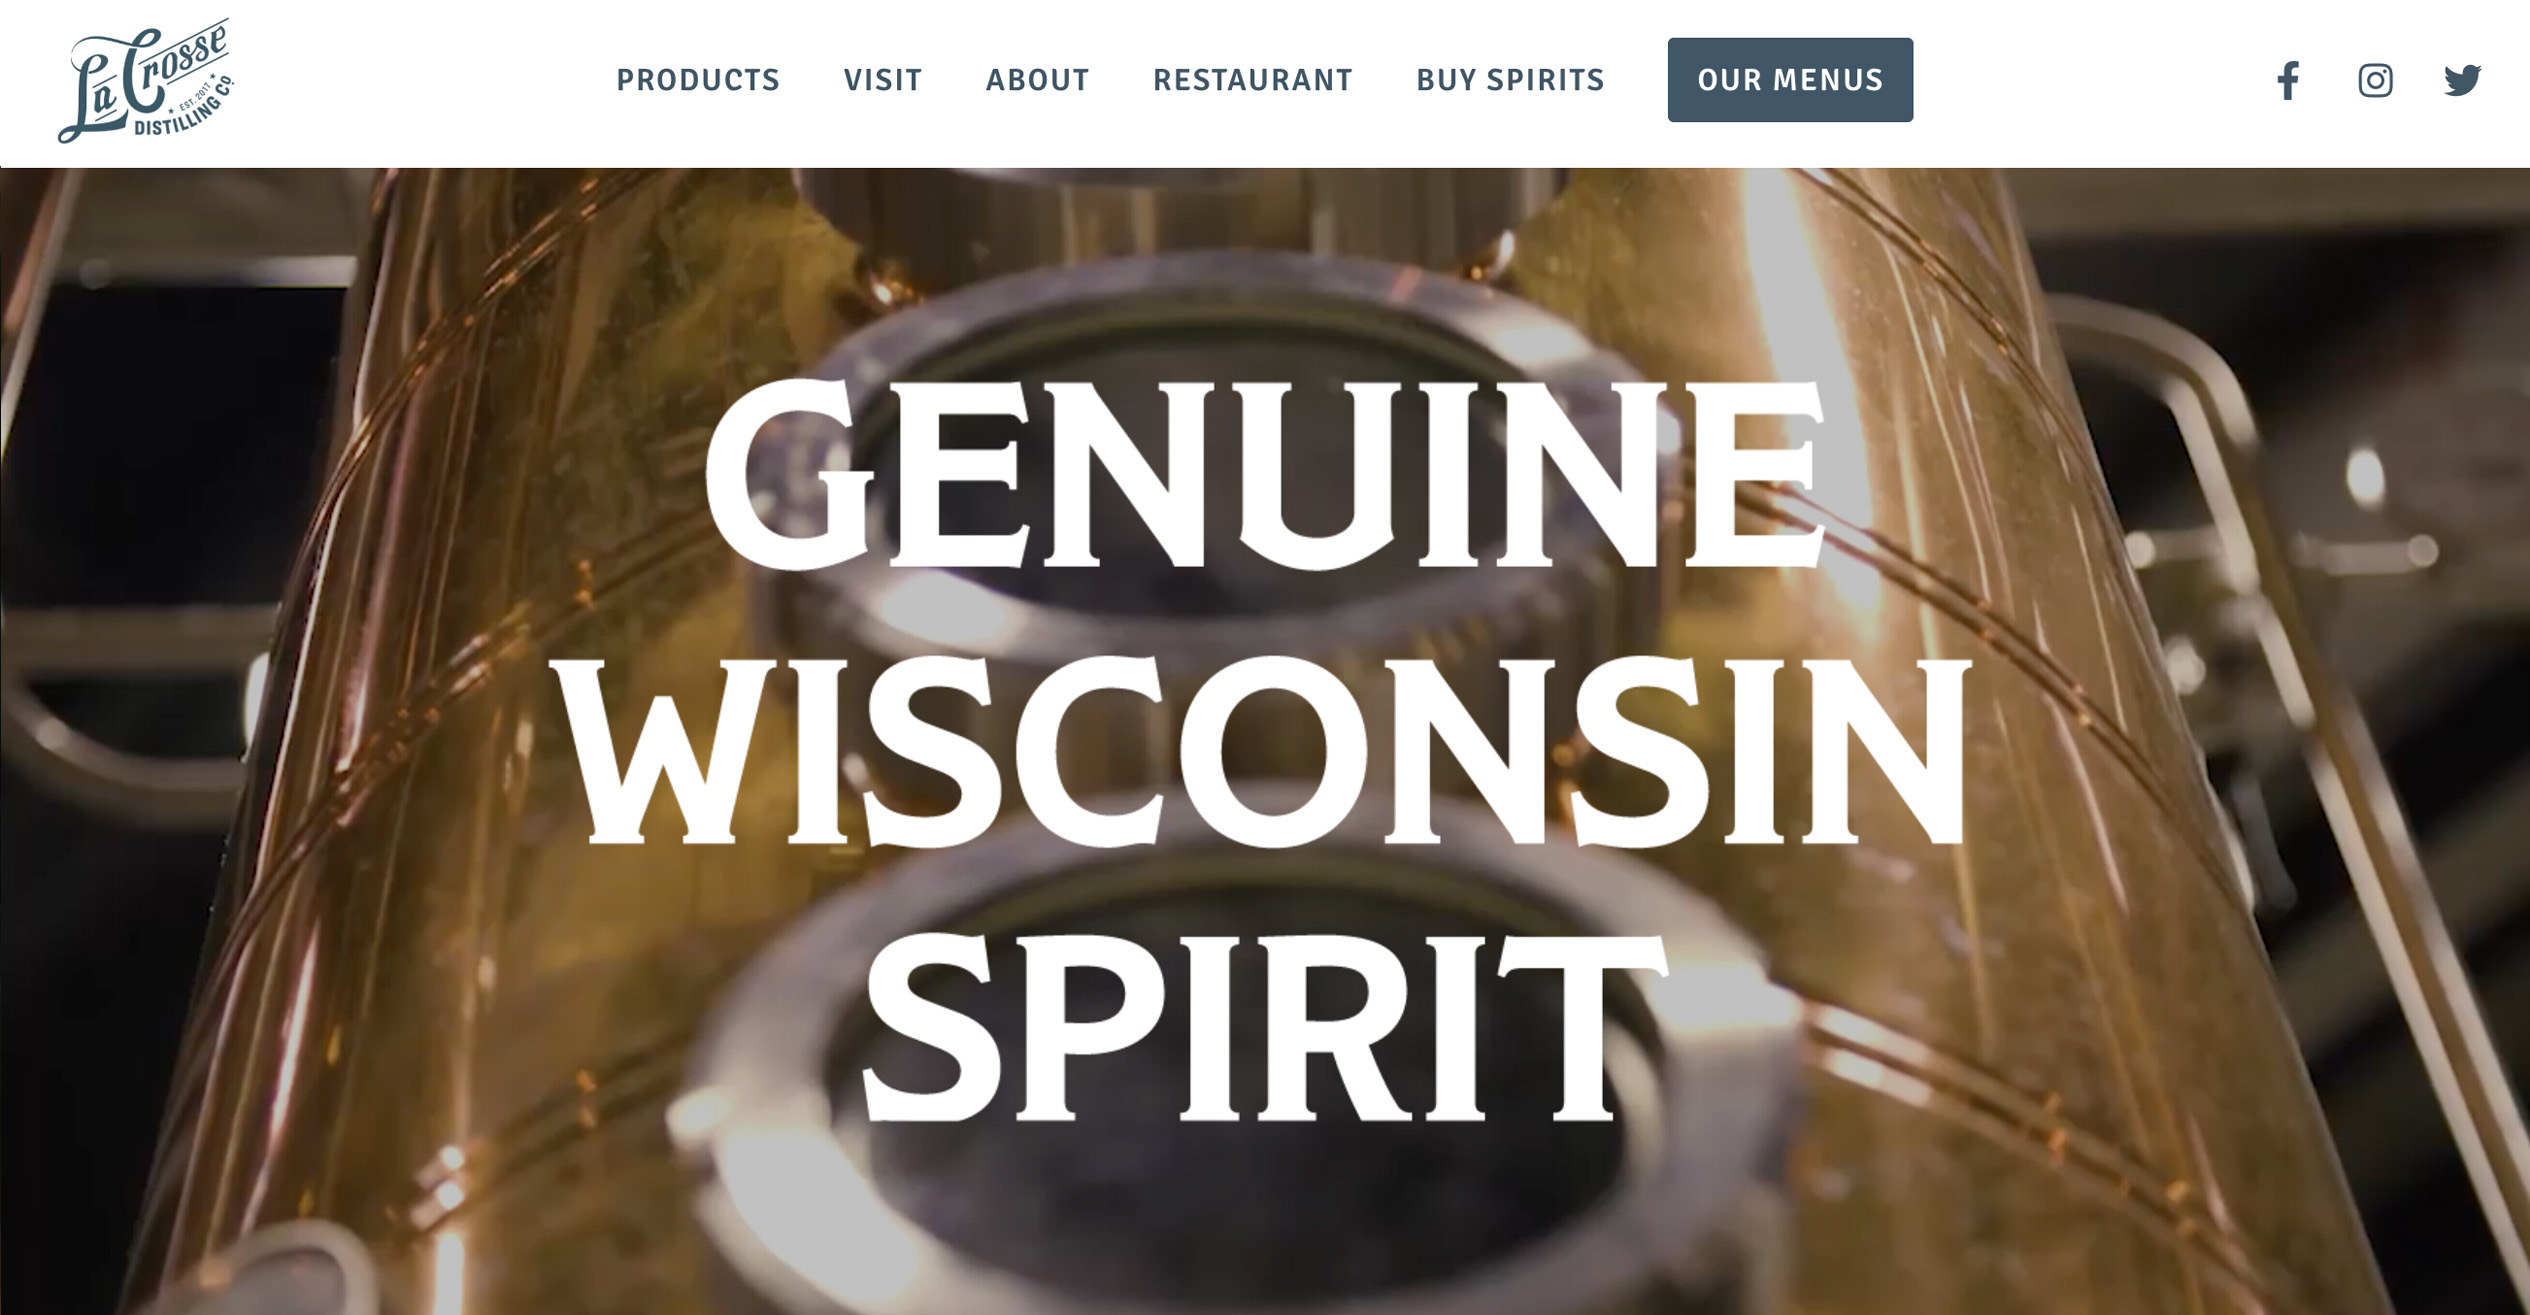 La Crosse Distilling Co. web design services genuine wisconsin spirit slider